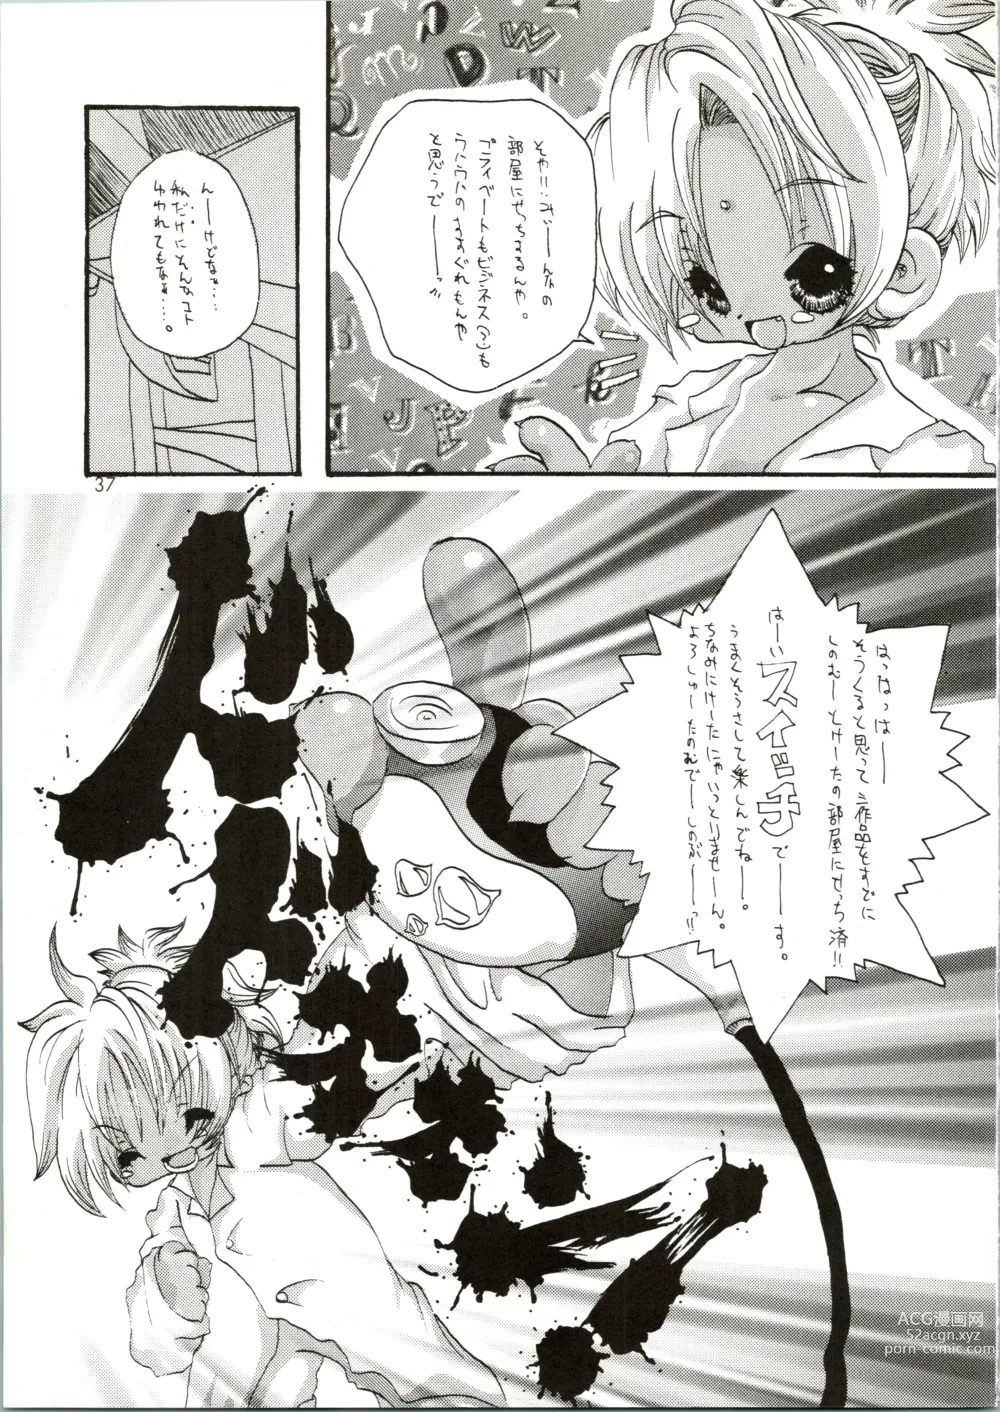 Page 37 of doujinshi Love Urashima